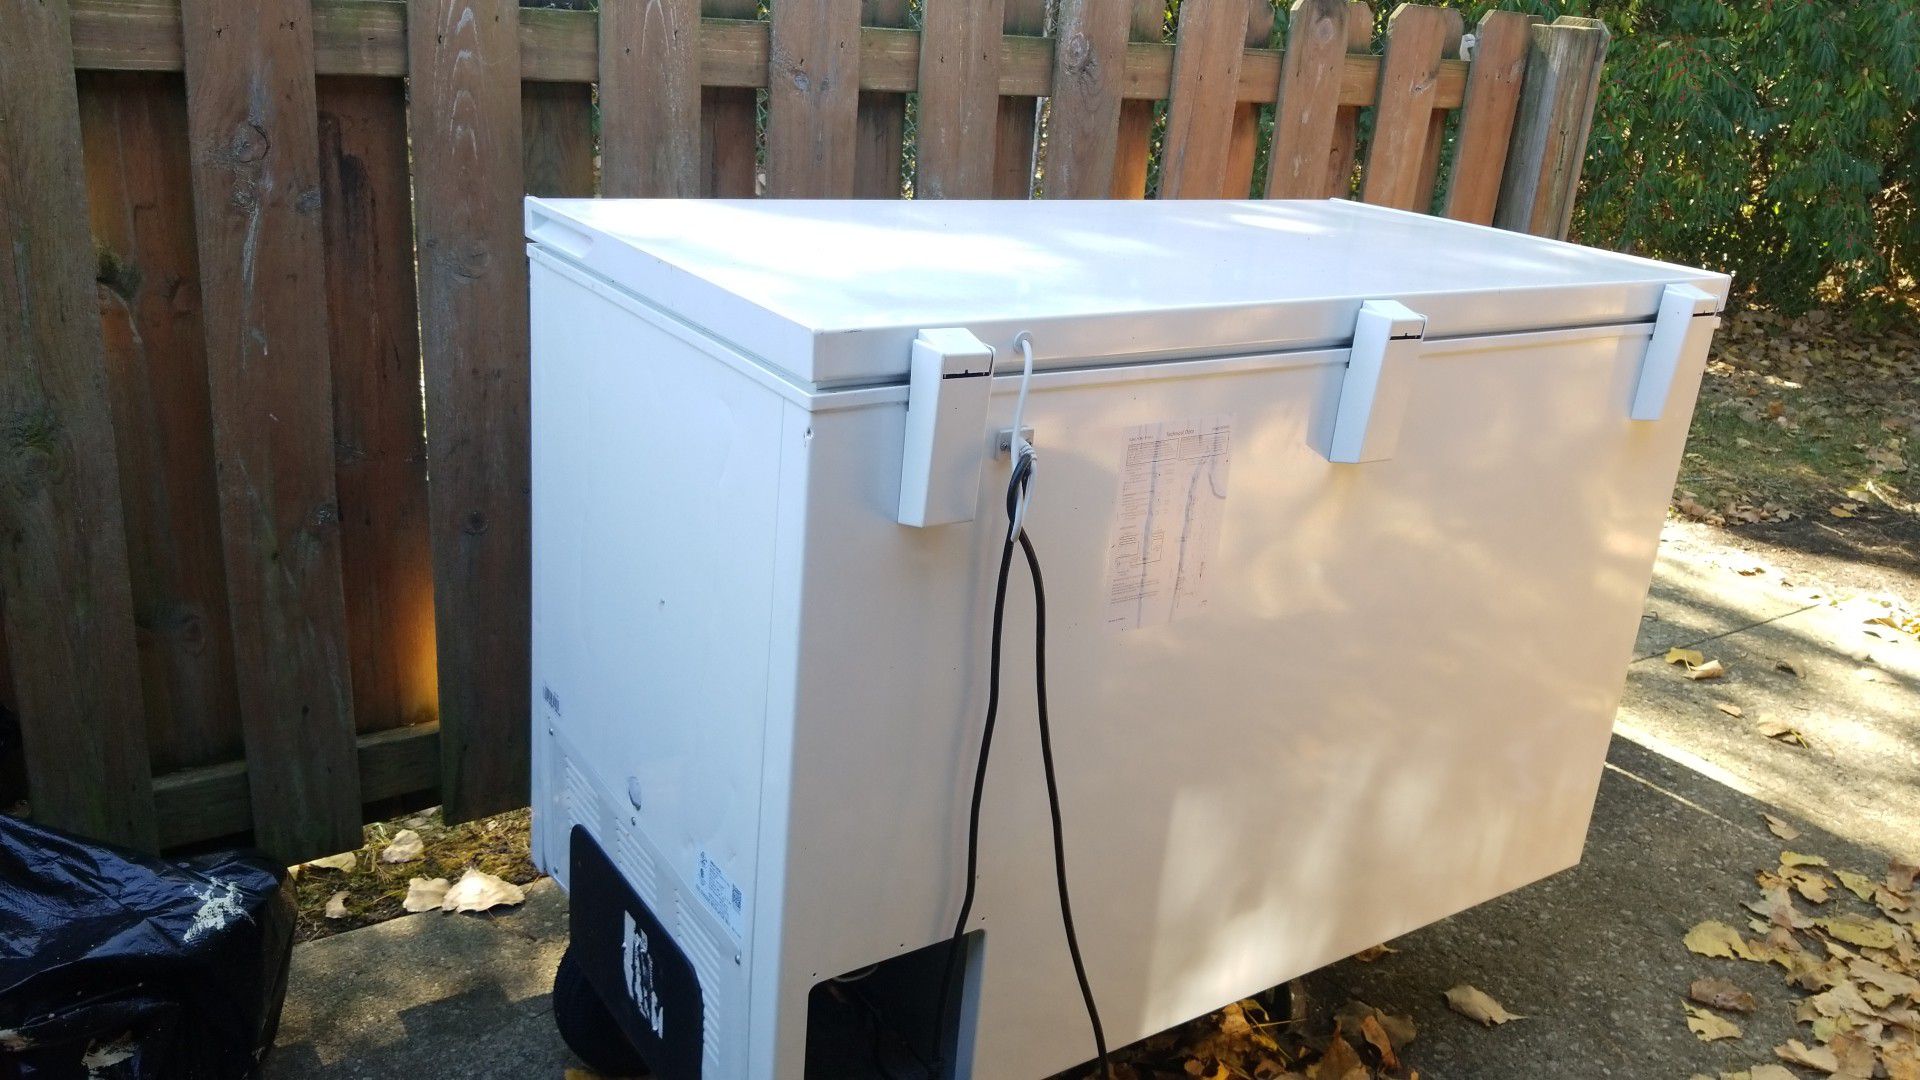 Medium size, white, General Electric chest freezer